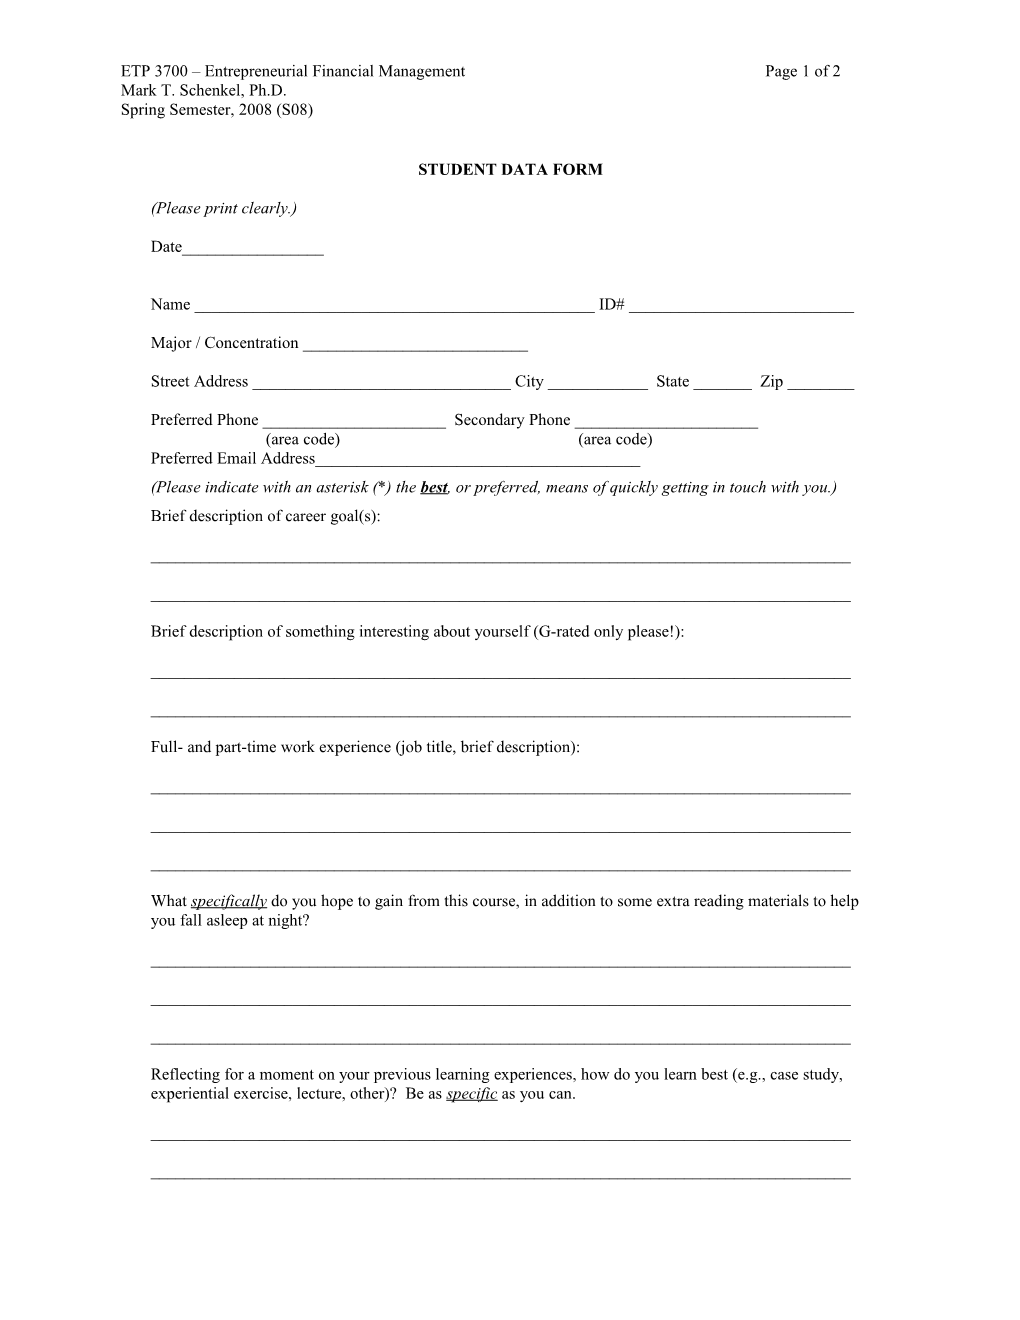 Student Data Form